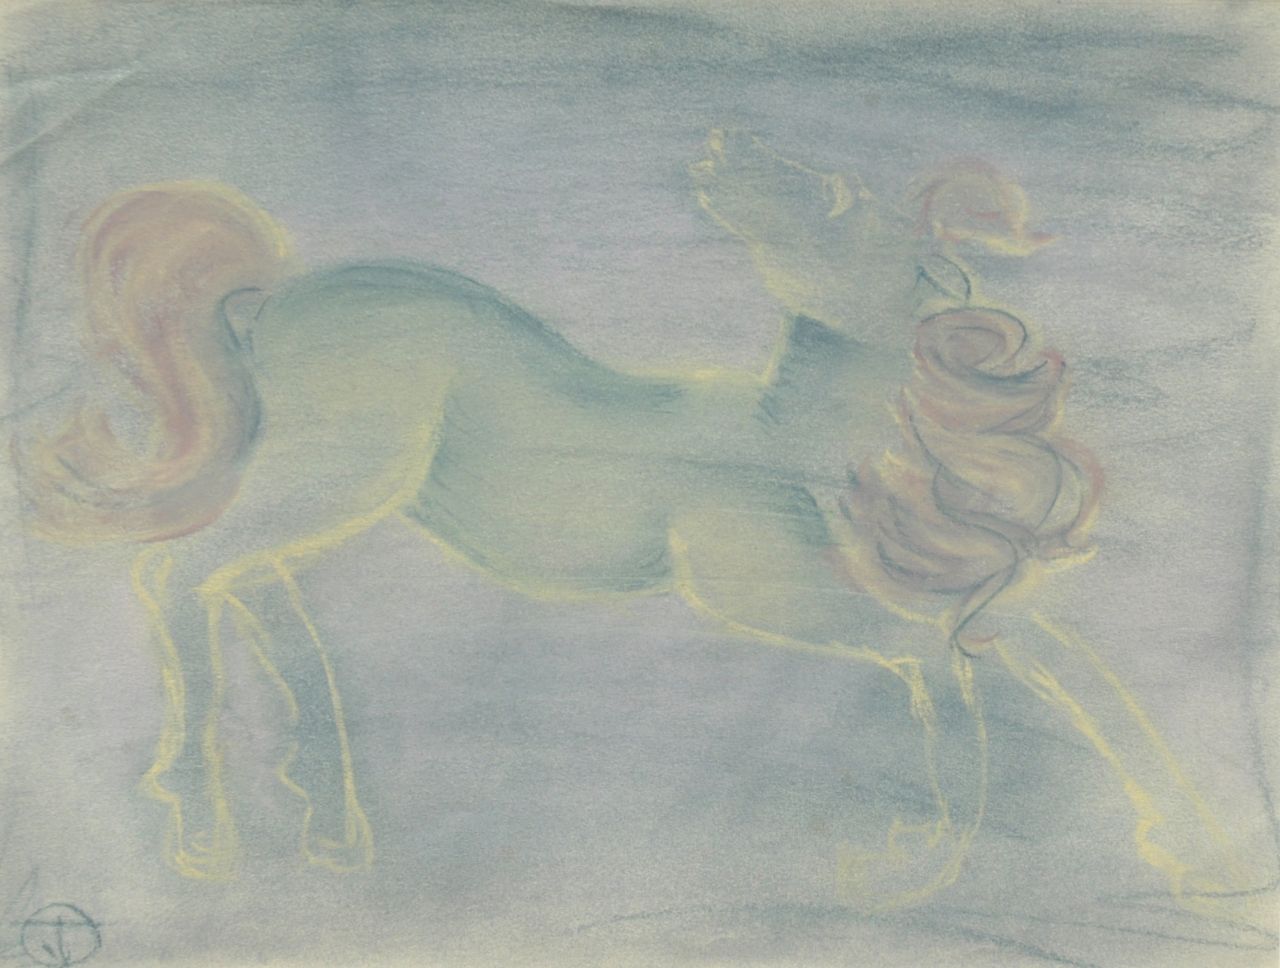 Oranje-Nassau (Prinses Beatrix) B.W.A. van | Beatrix Wilhelmina Armgard van Oranje-Nassau (Prinses Beatrix), Horse, Pastell auf Papier 23,2 x 30,3 cm, signed with monogram TvO